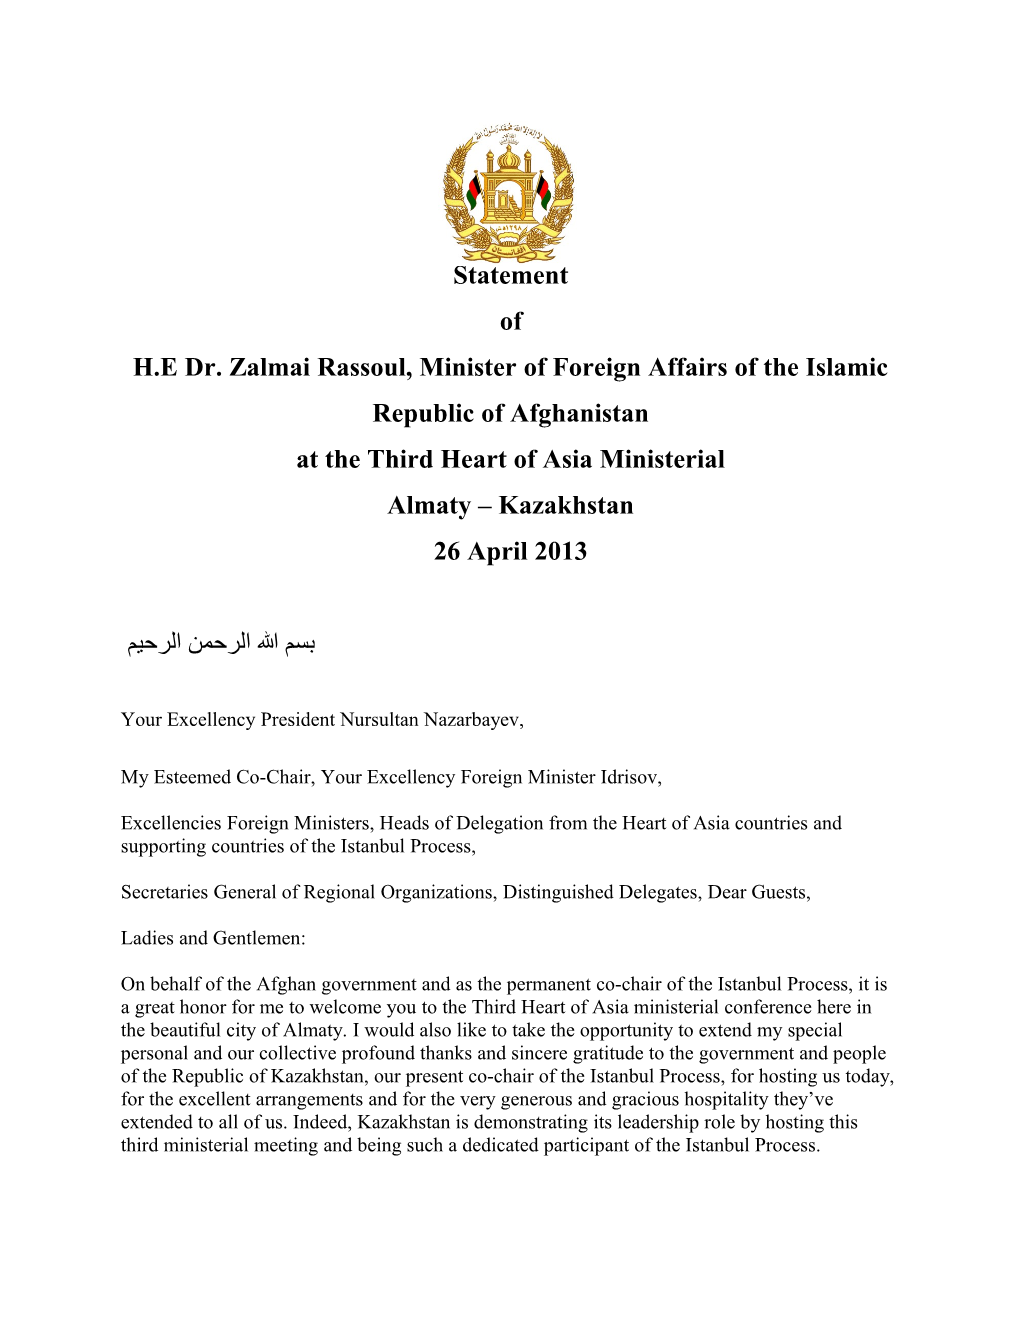 H.E Dr. Zalmai Rassoul, Minister of Foreign Affairs of the Islamic Republic of Afghanistan